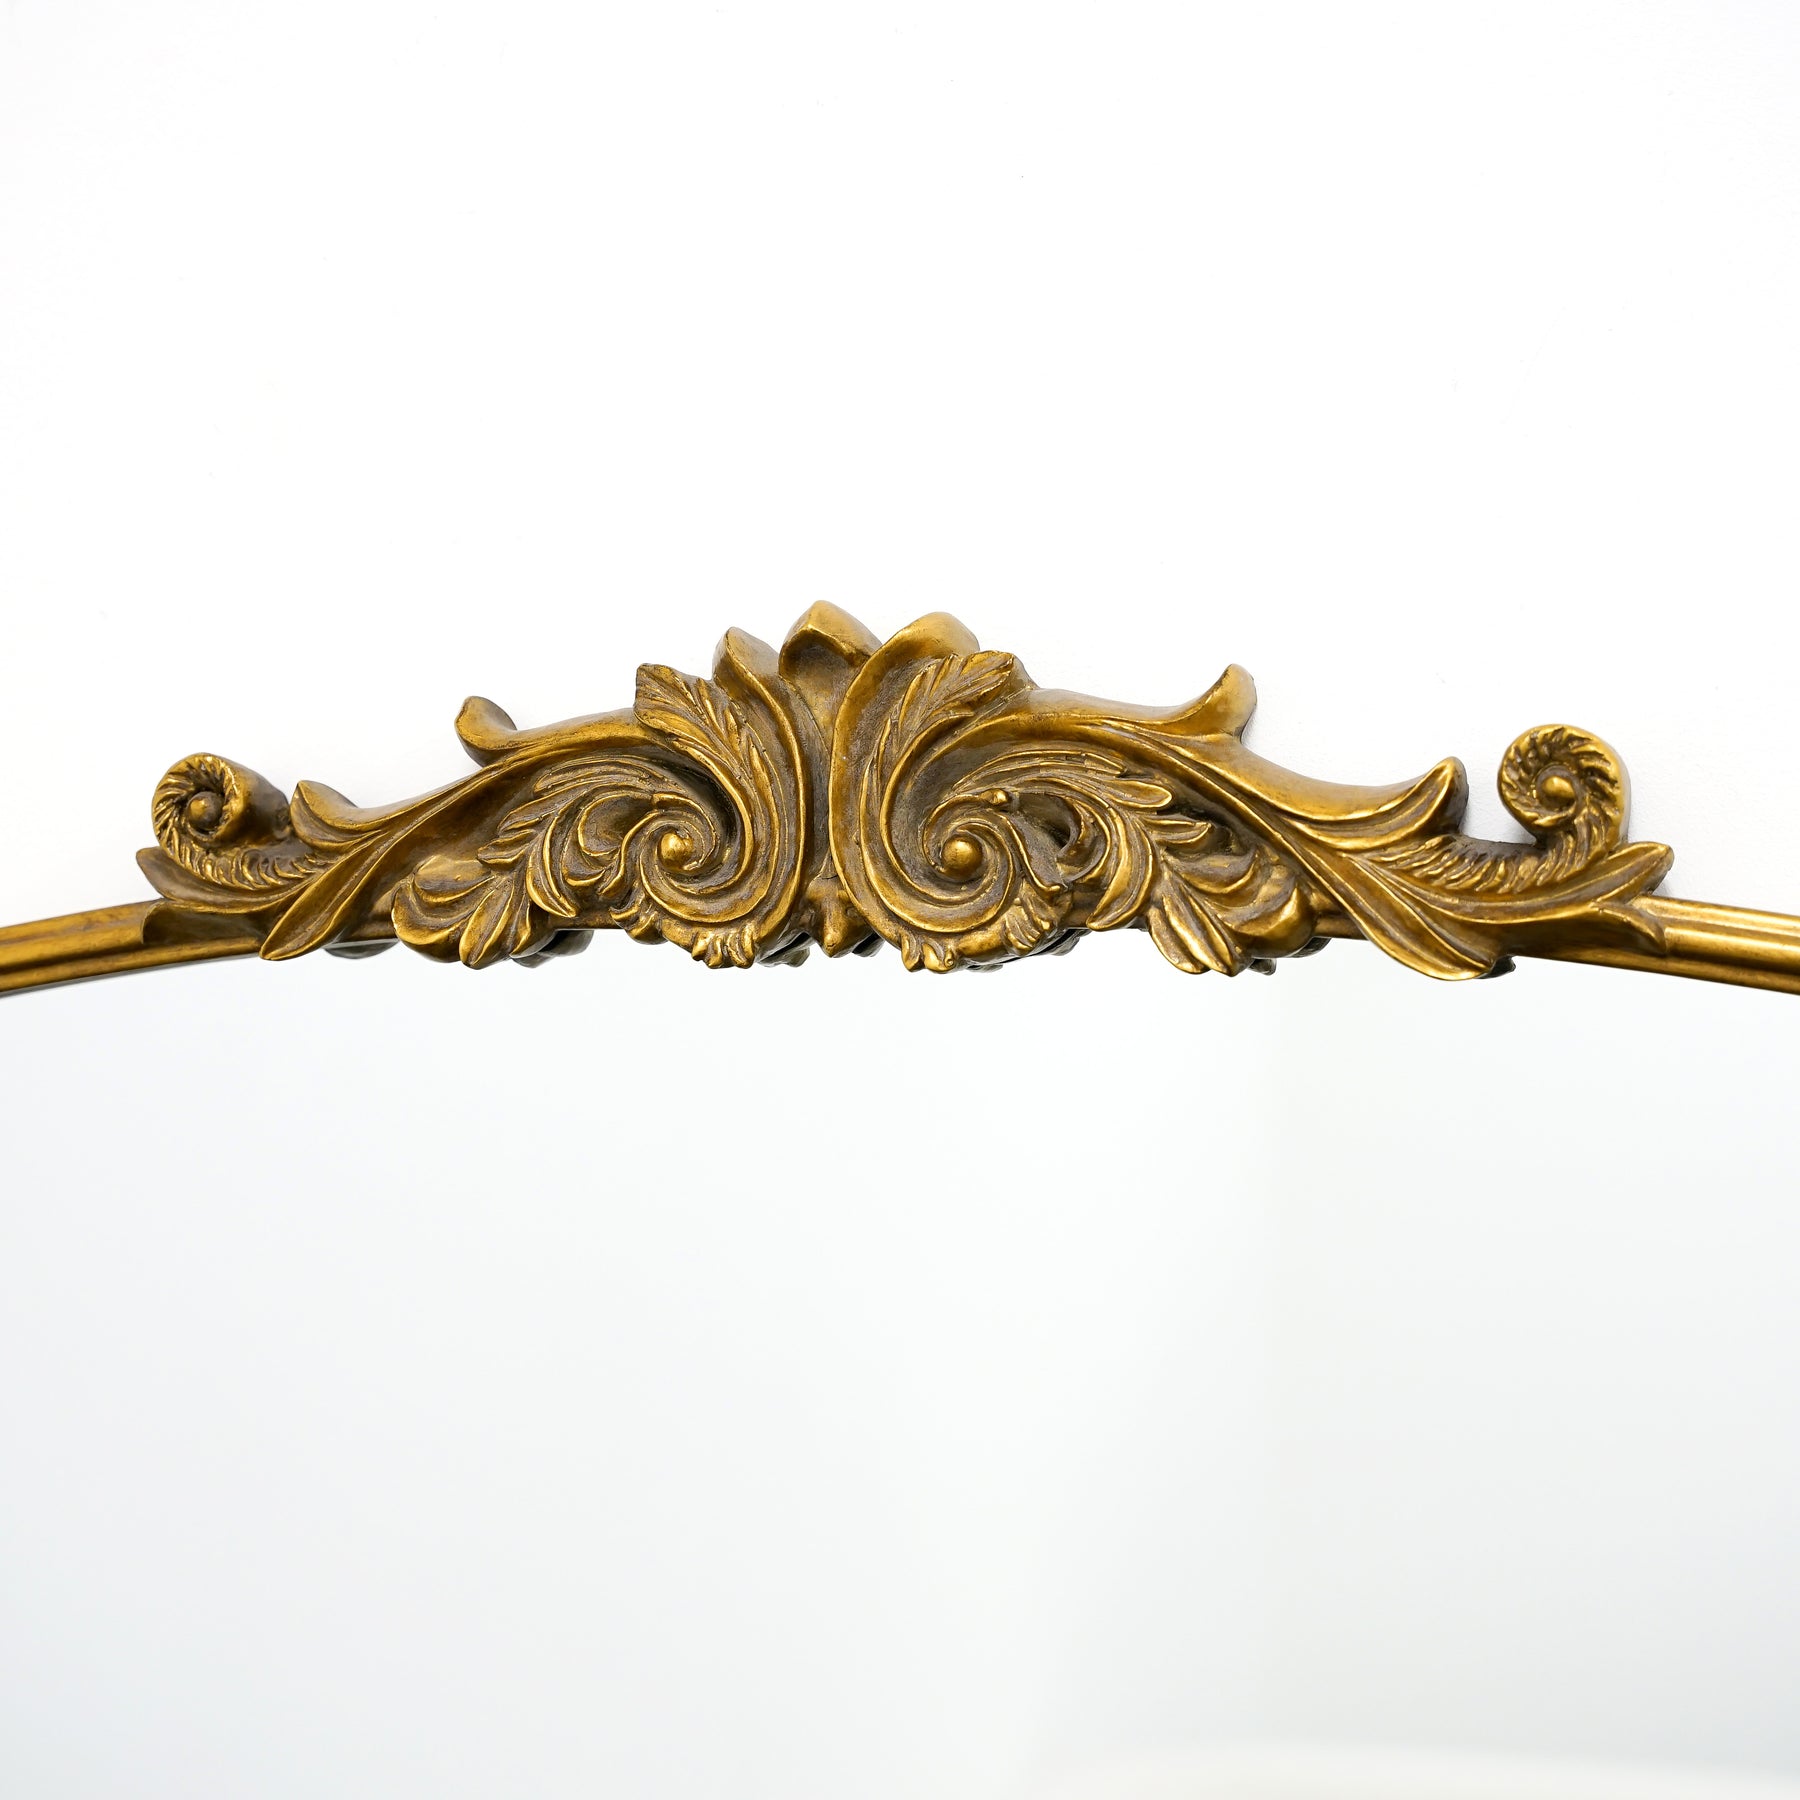 Amelia - Full Length Gold Arched Metal Mirror 180cm x 100cm